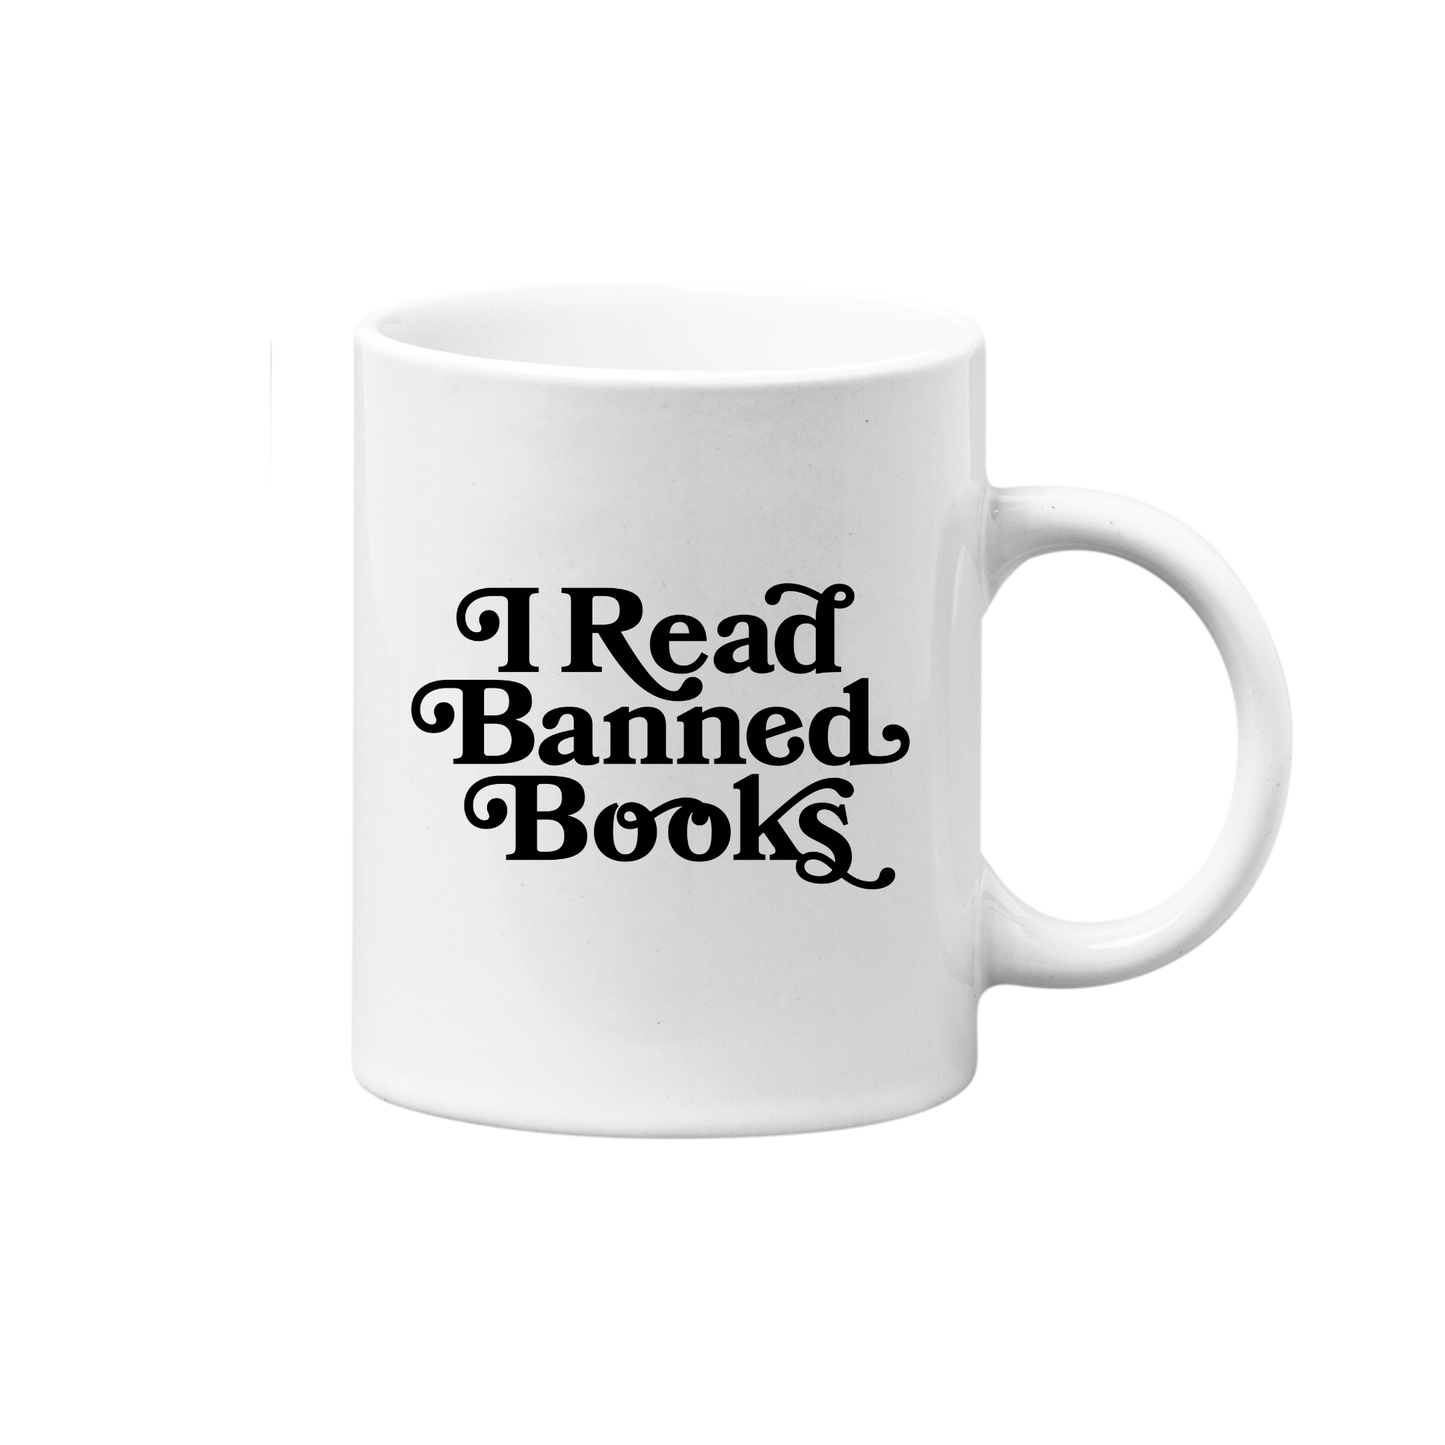 I Read Banned Books Mug